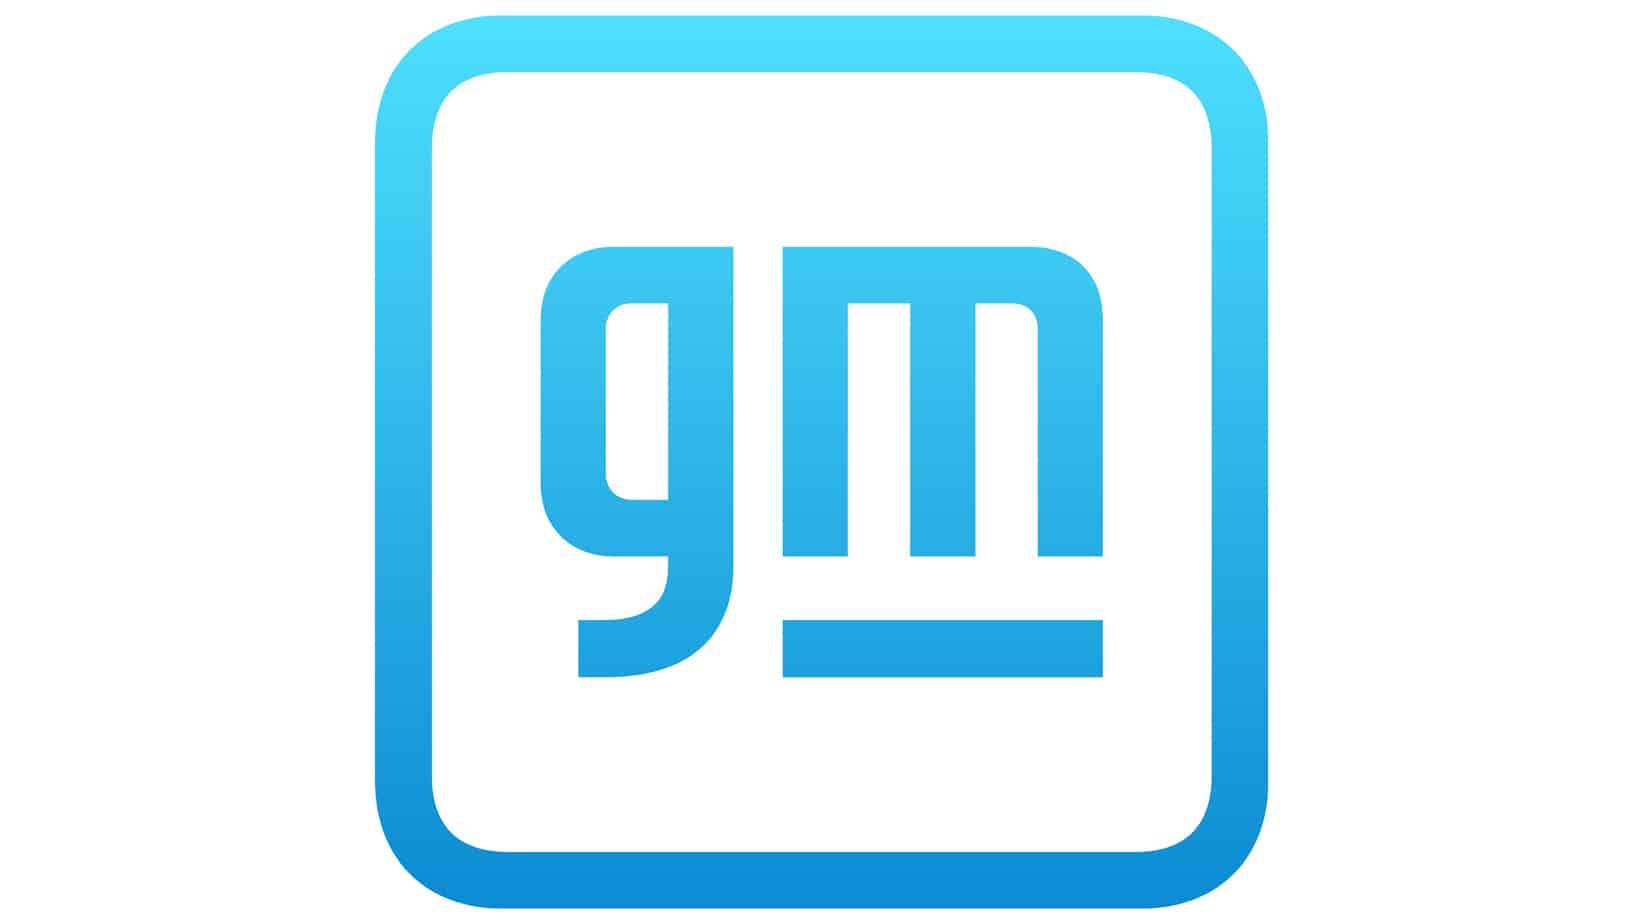 General Motors serait prêt à investir dans la startup Momenta.